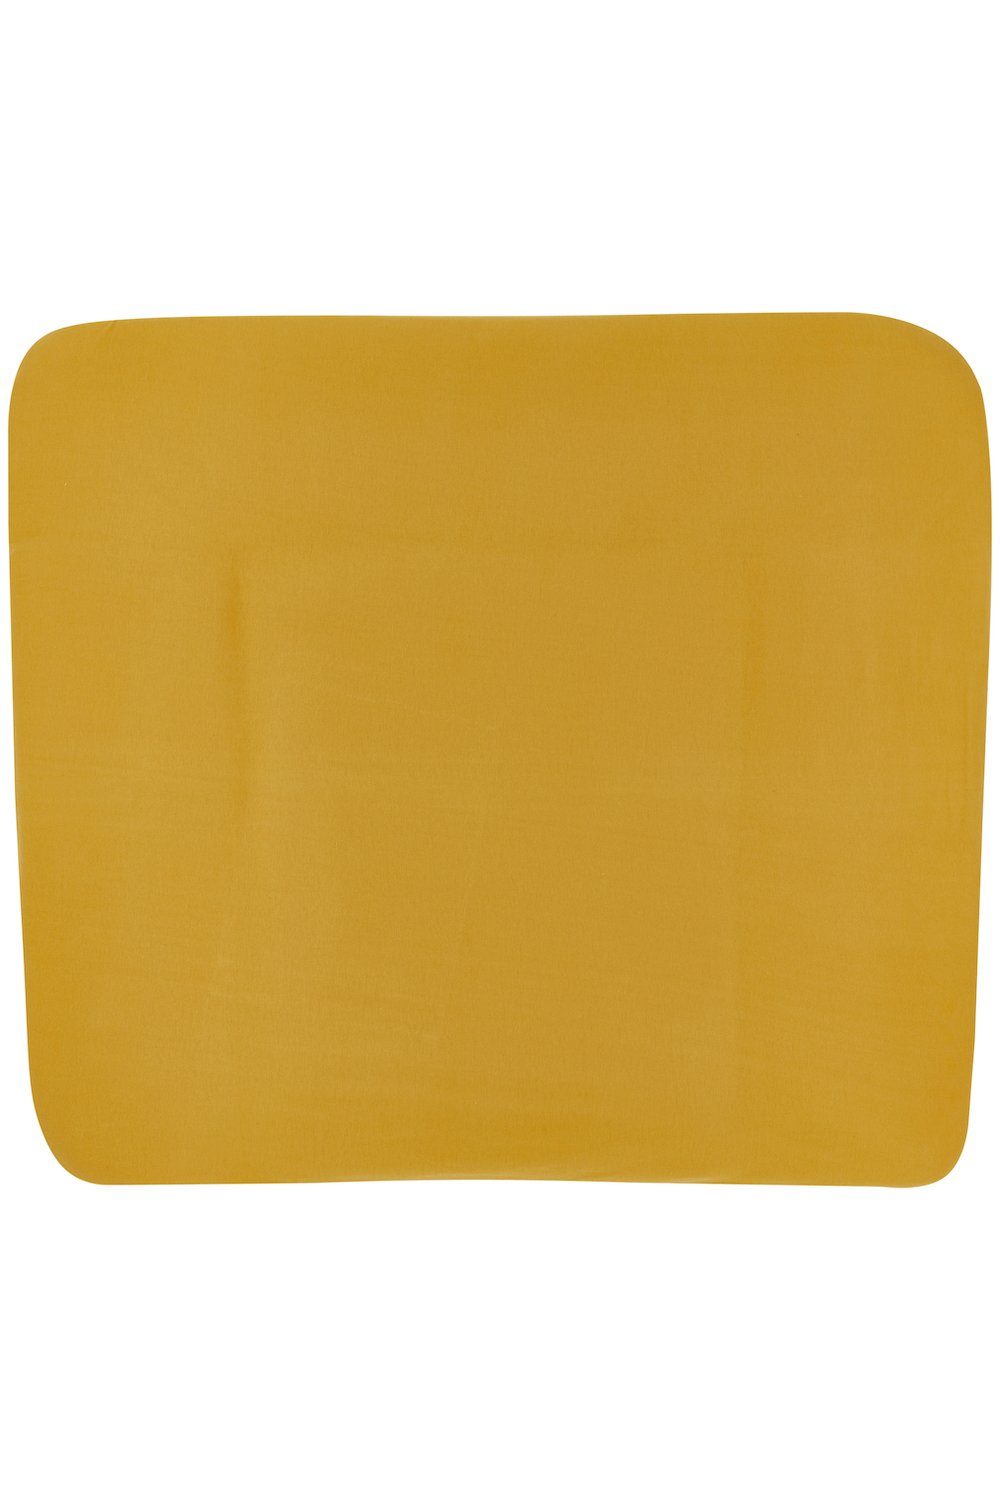 Meyco Baby Wickelauflagenbezug Uni Honey Gold (1-tlg), 85x75cm